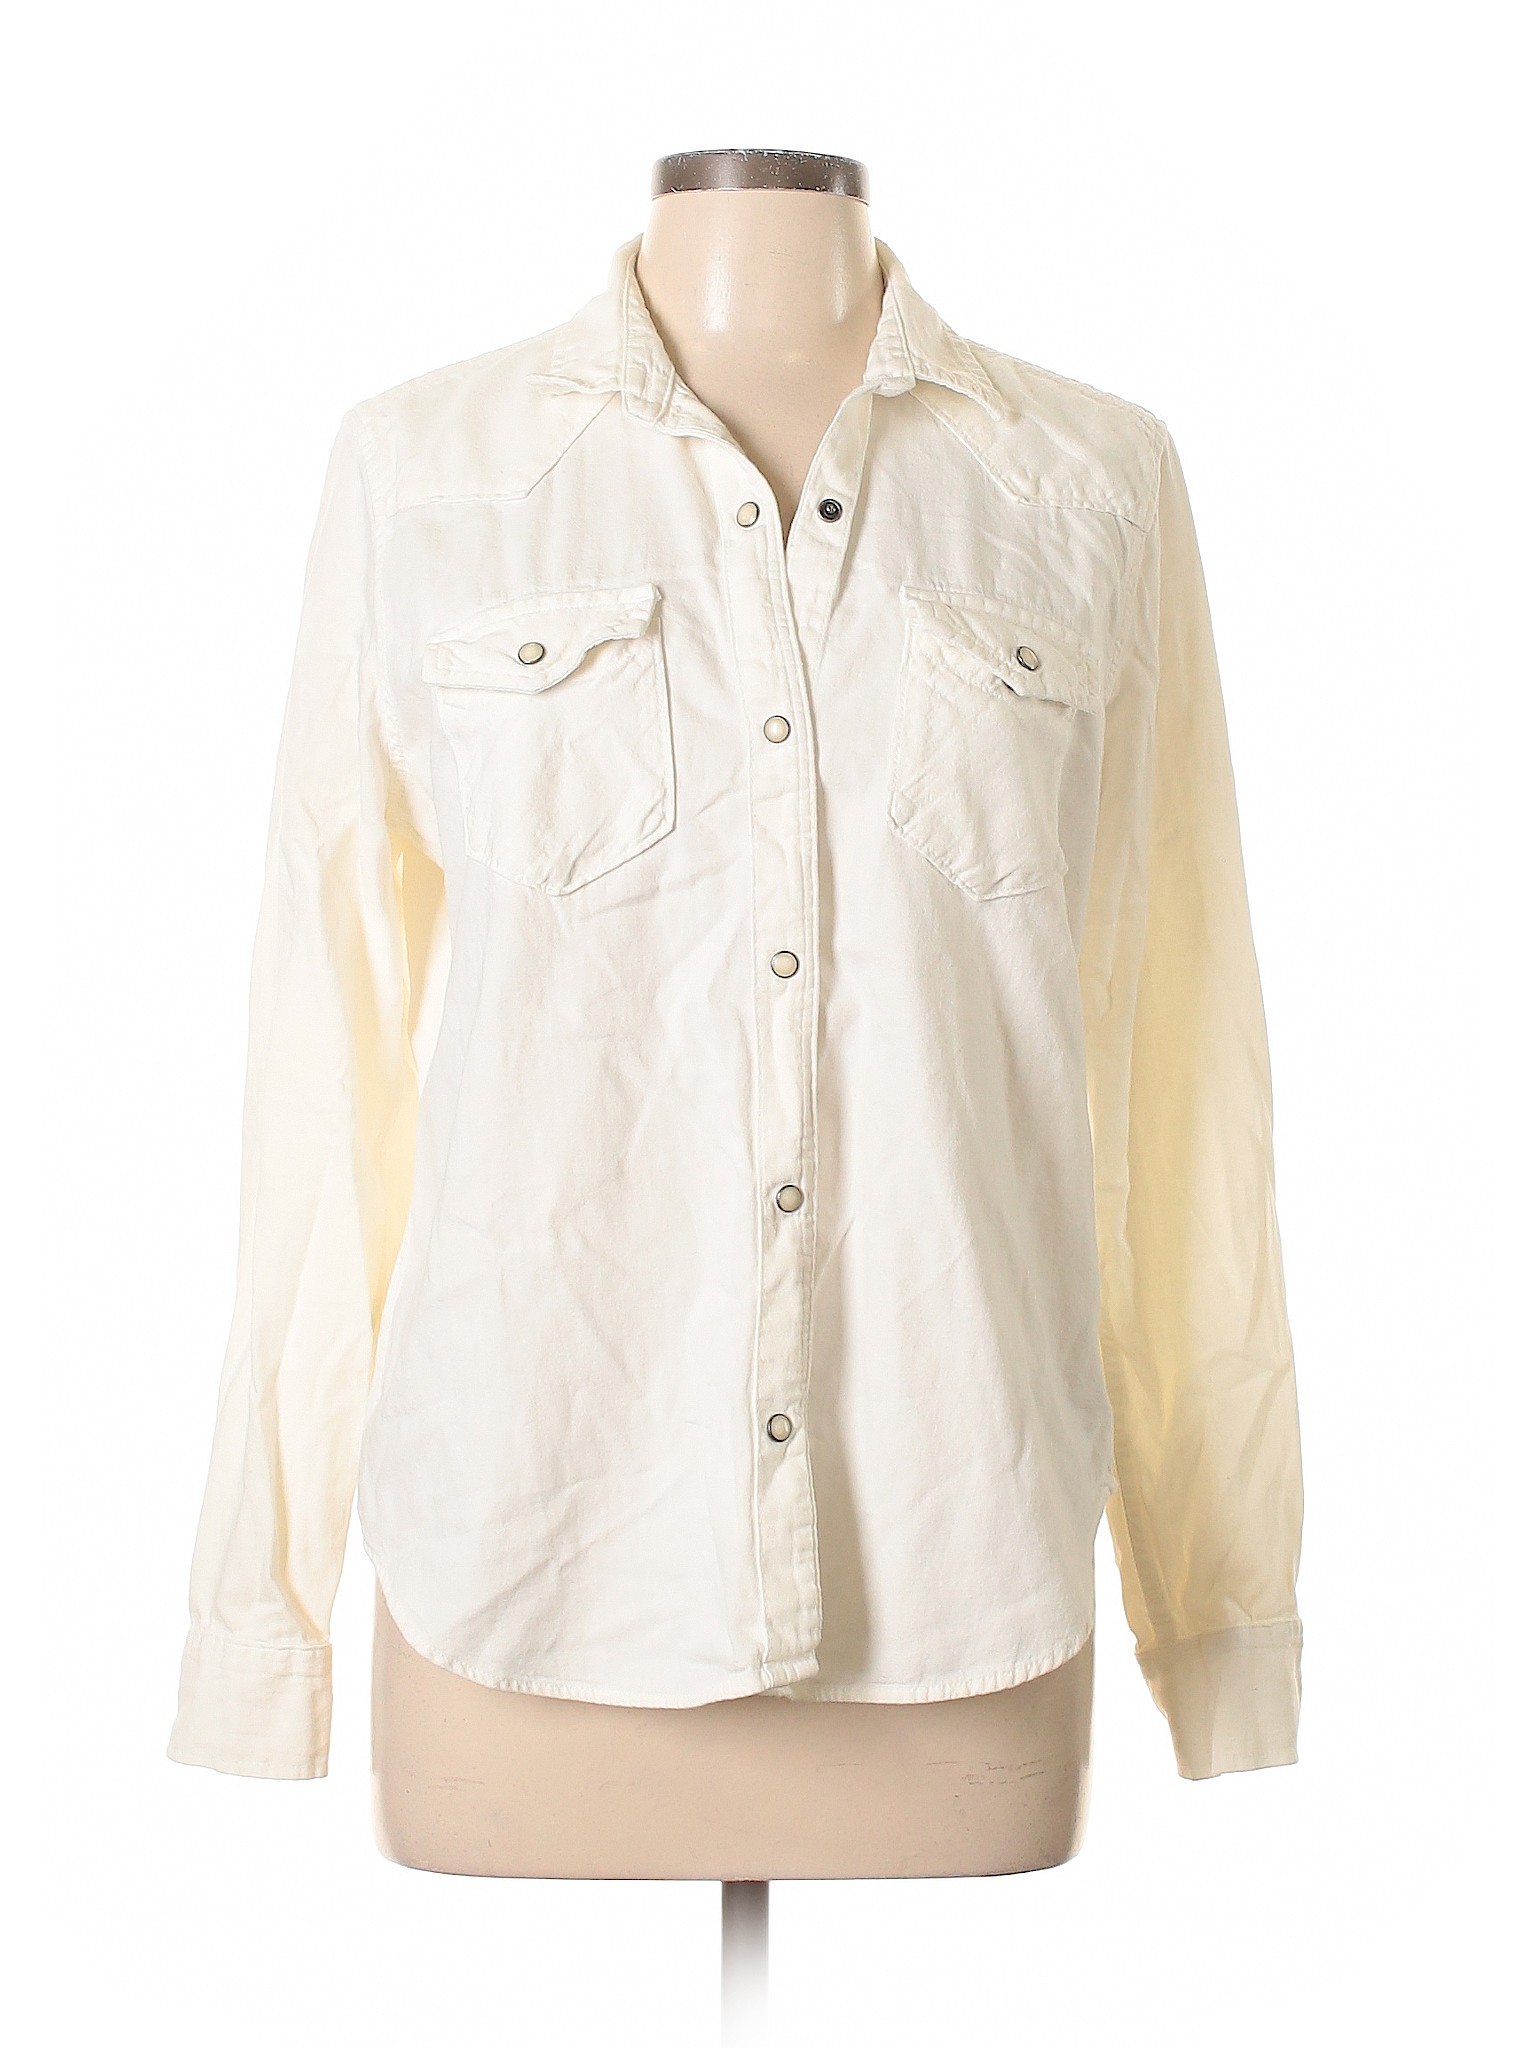 Gap Women Ivory Long Sleeve Button-Down Shirt L | eBay